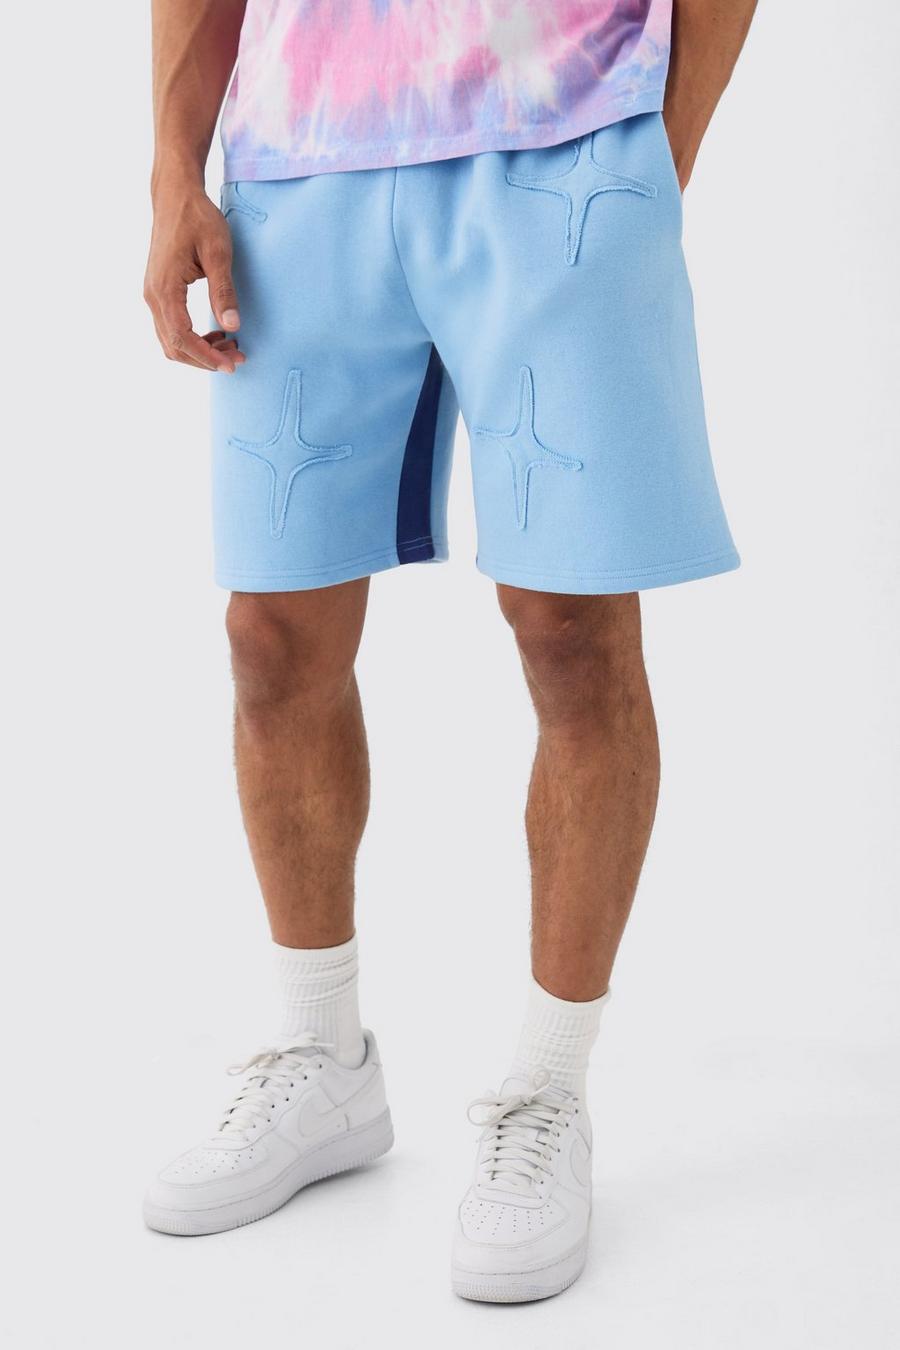 Lockere blaue Shorts mit Applikation, Light blue